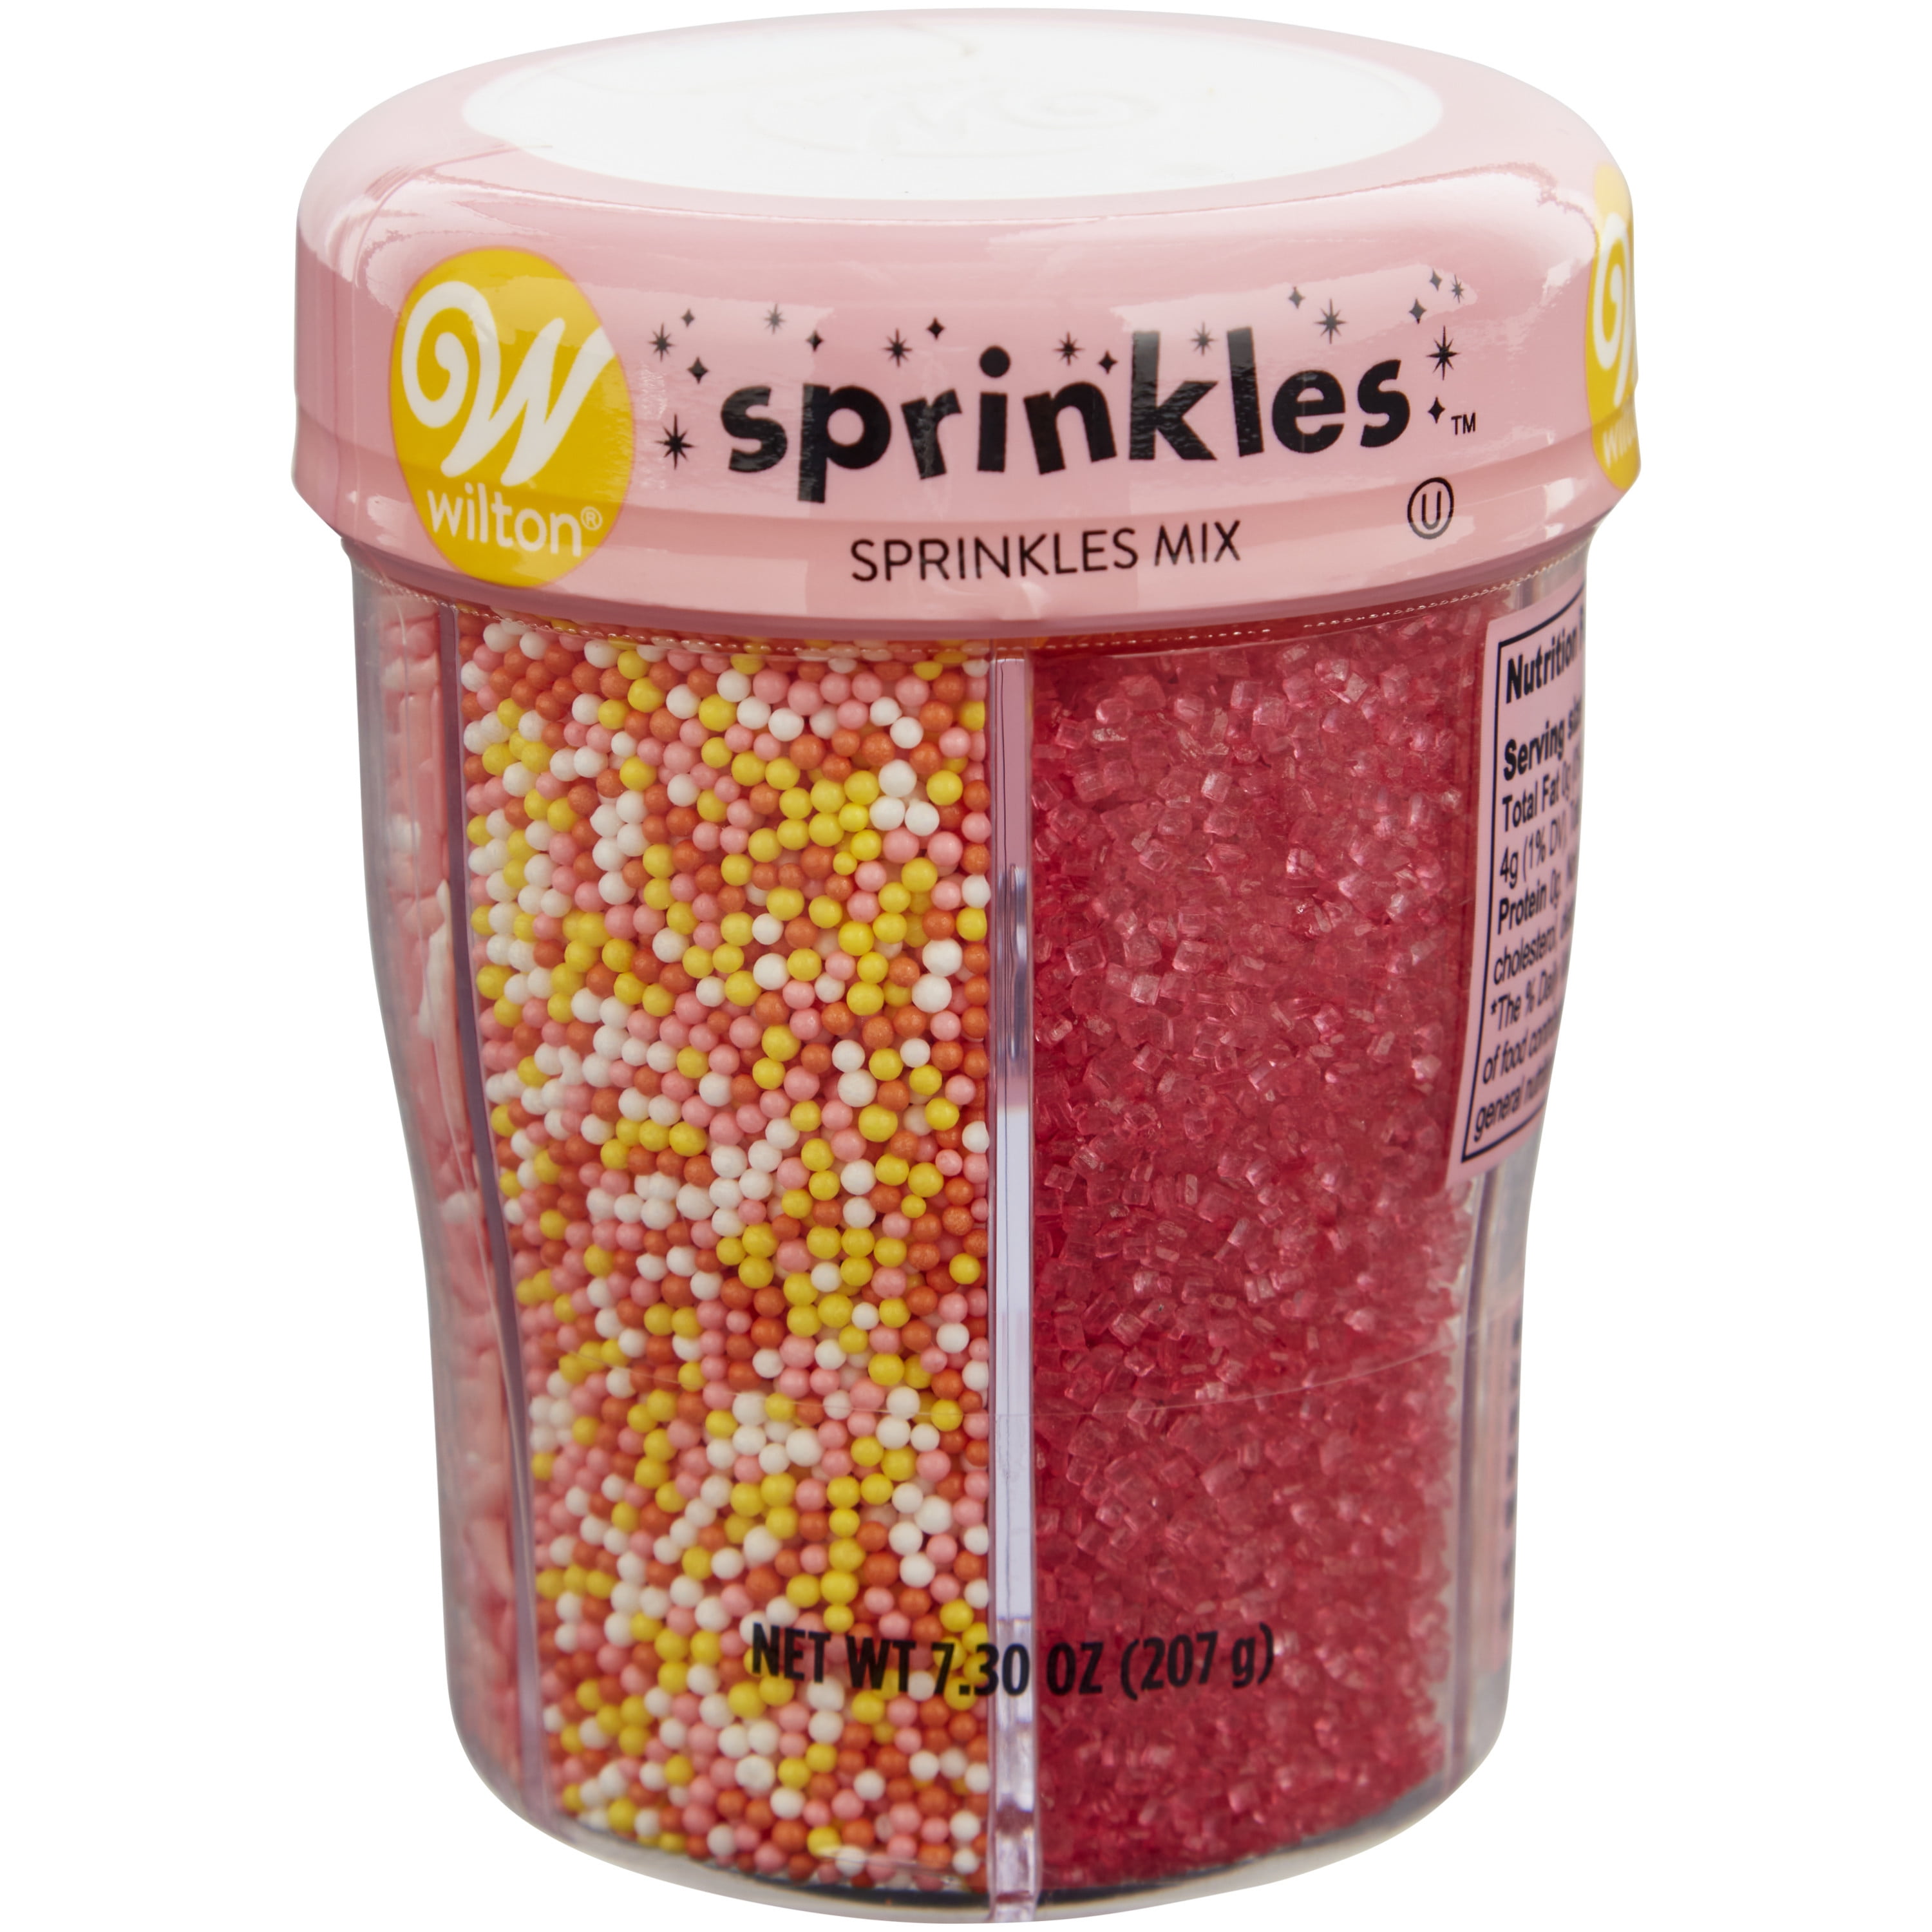 Wilton Pink, Yellow and White 6-Cell Sprinkle Mix, 7.30 oz.